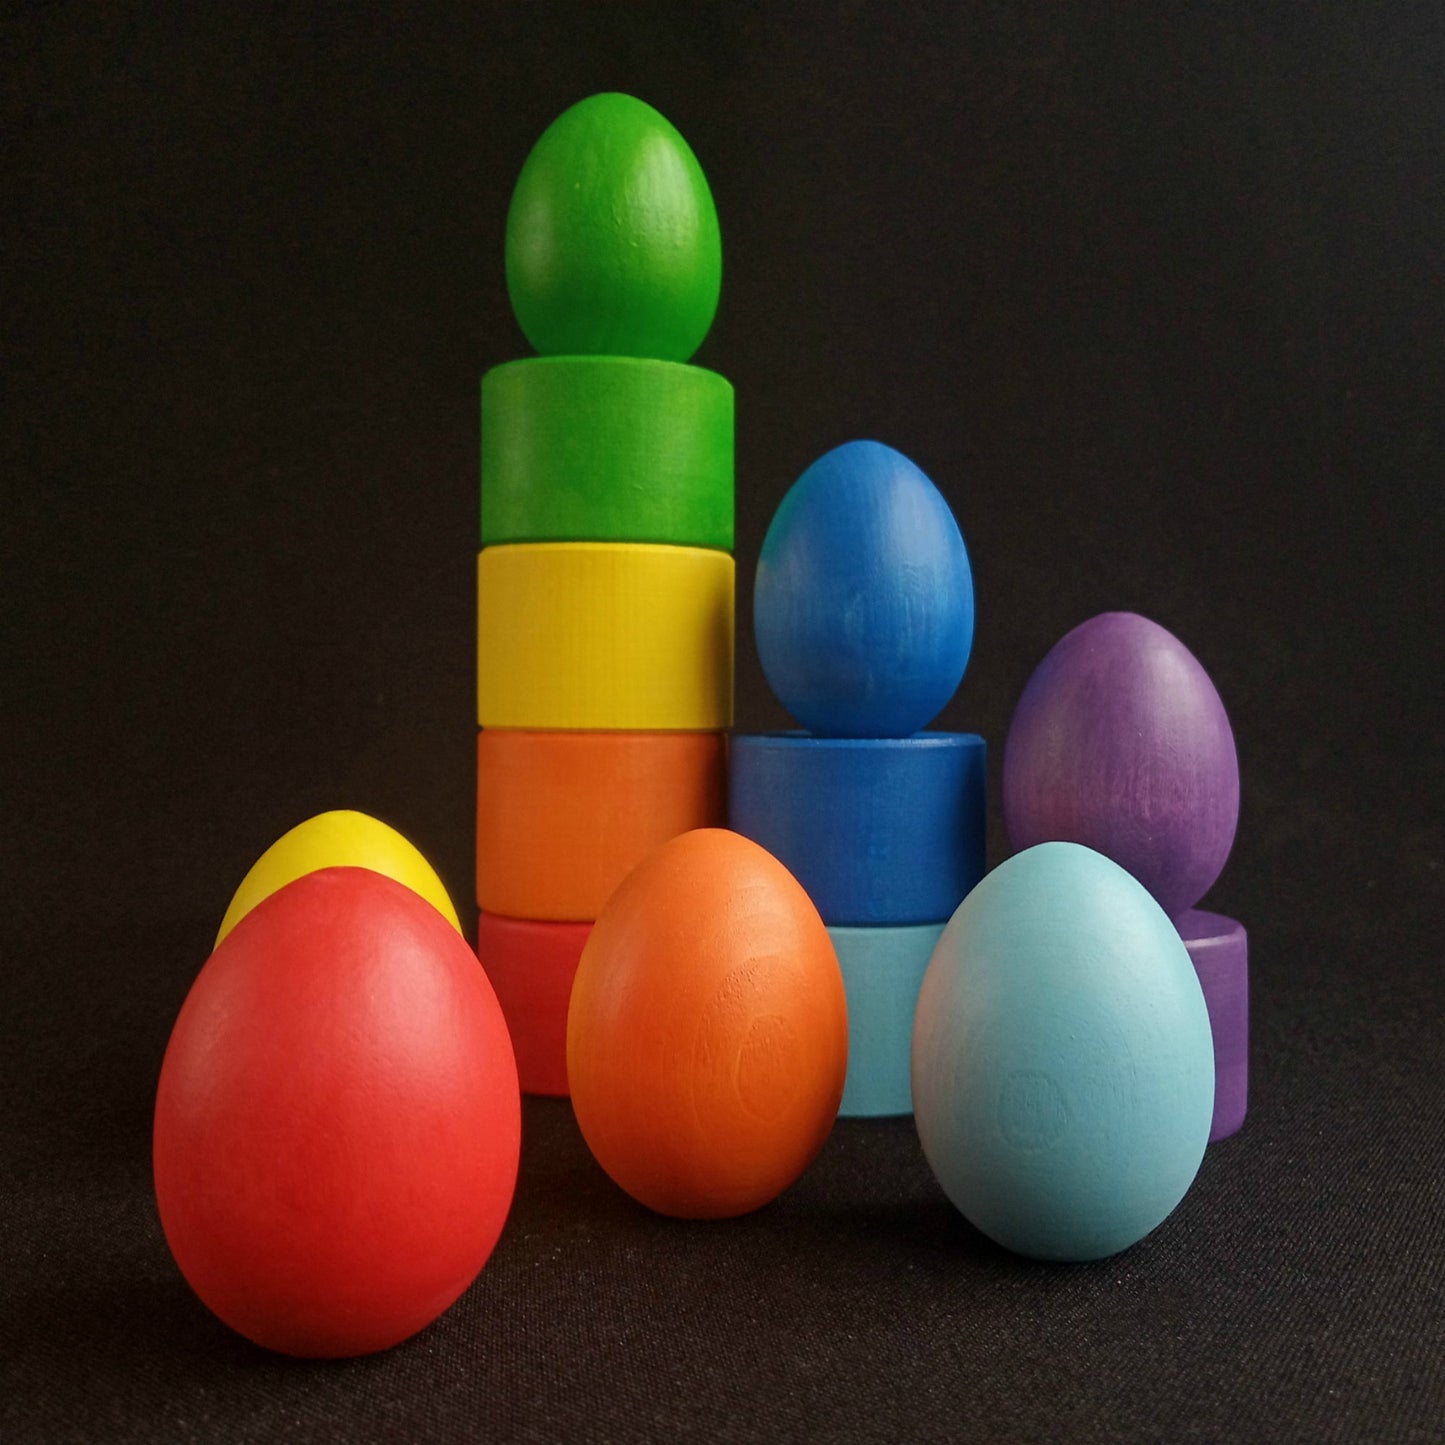 Colour Sorting Eggs